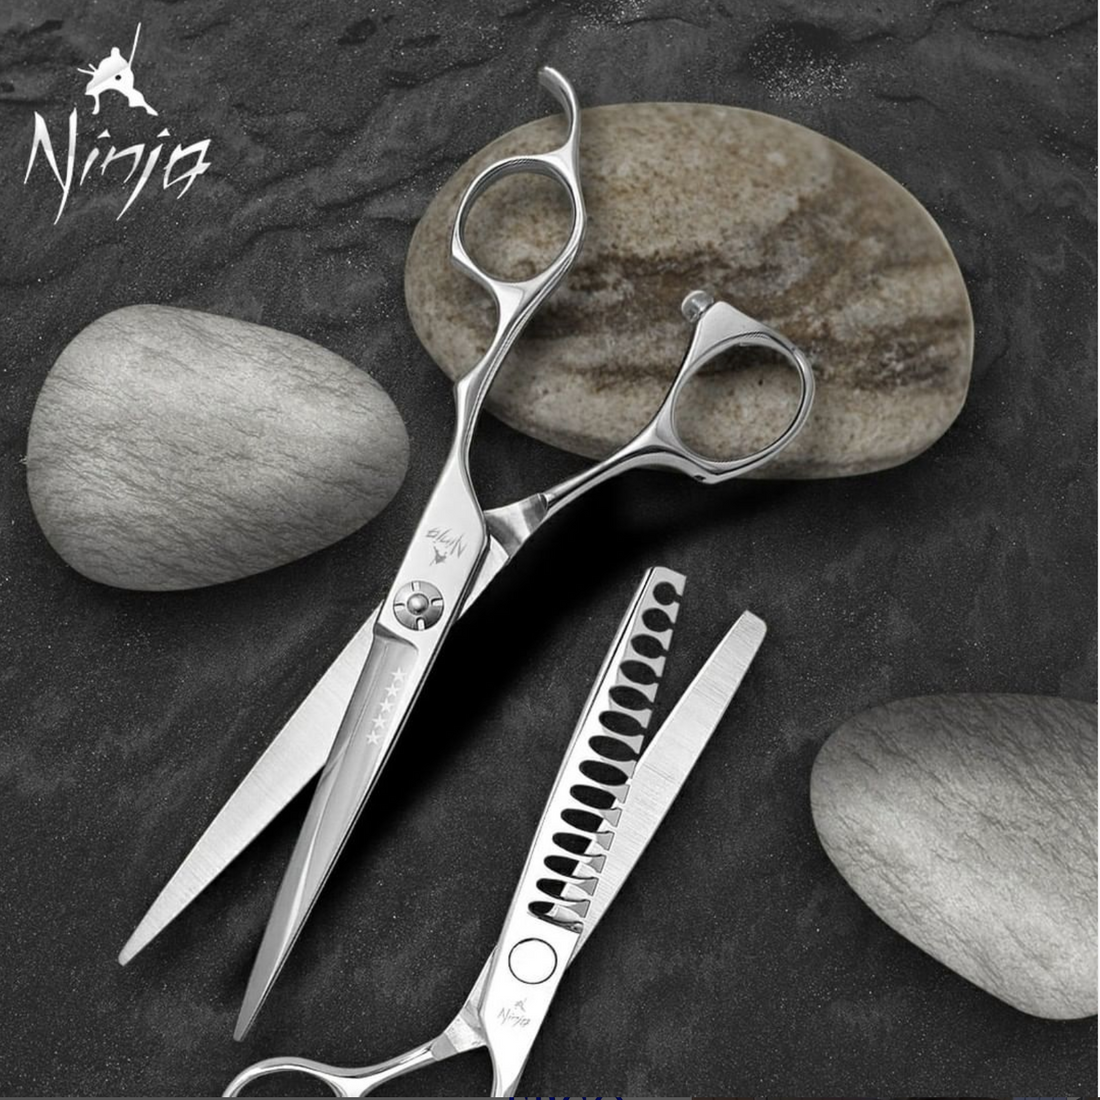 Ninja professional hair scissors set